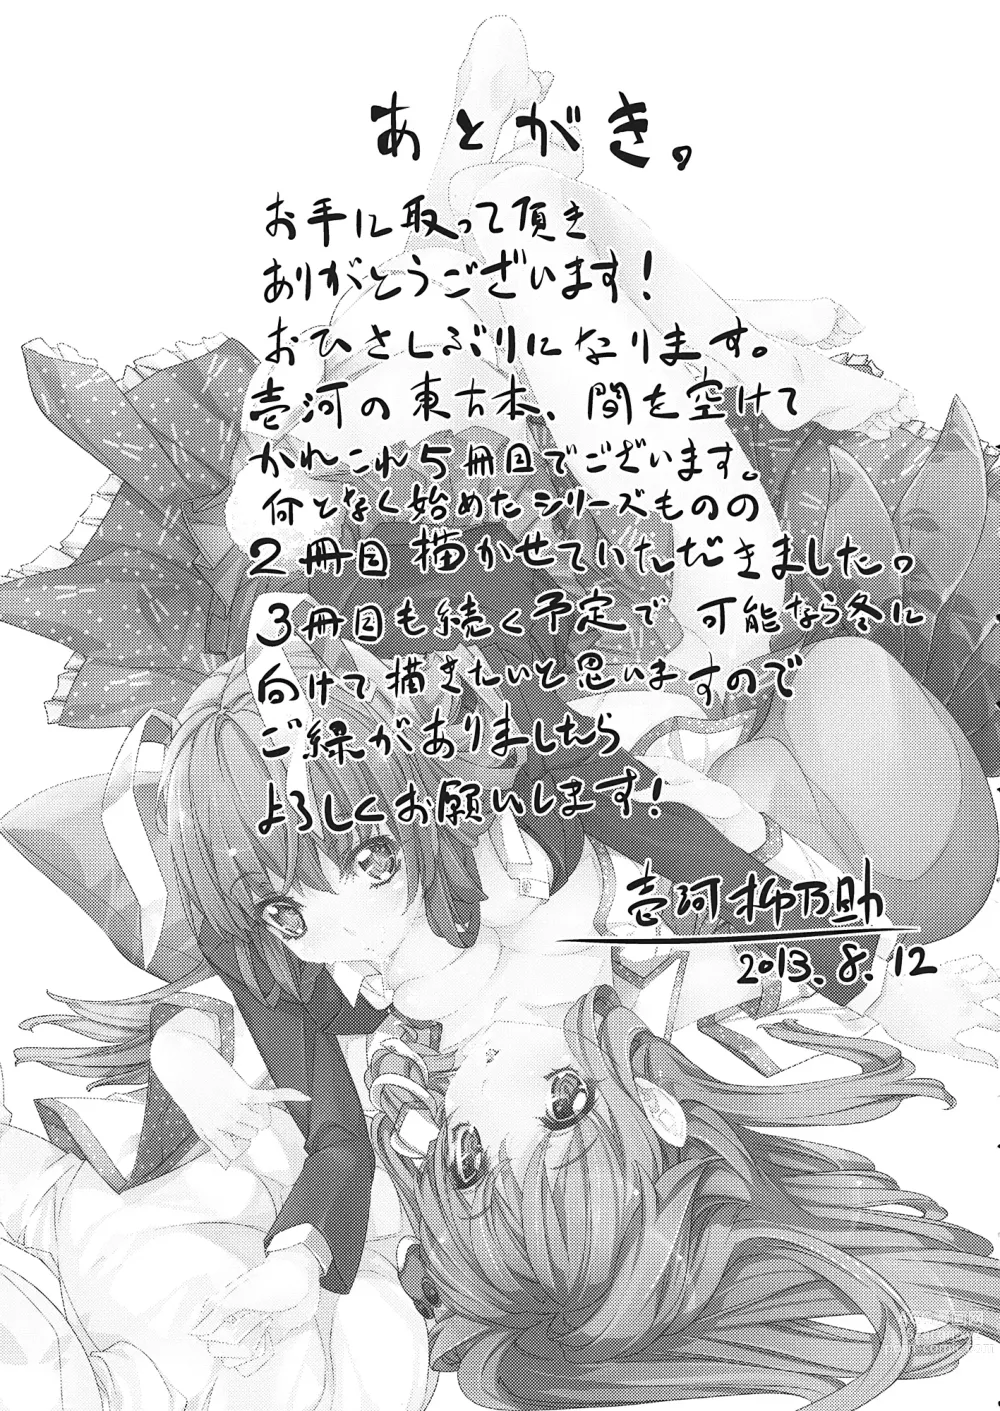 Page 25 of doujinshi Sanae Udon Futatama